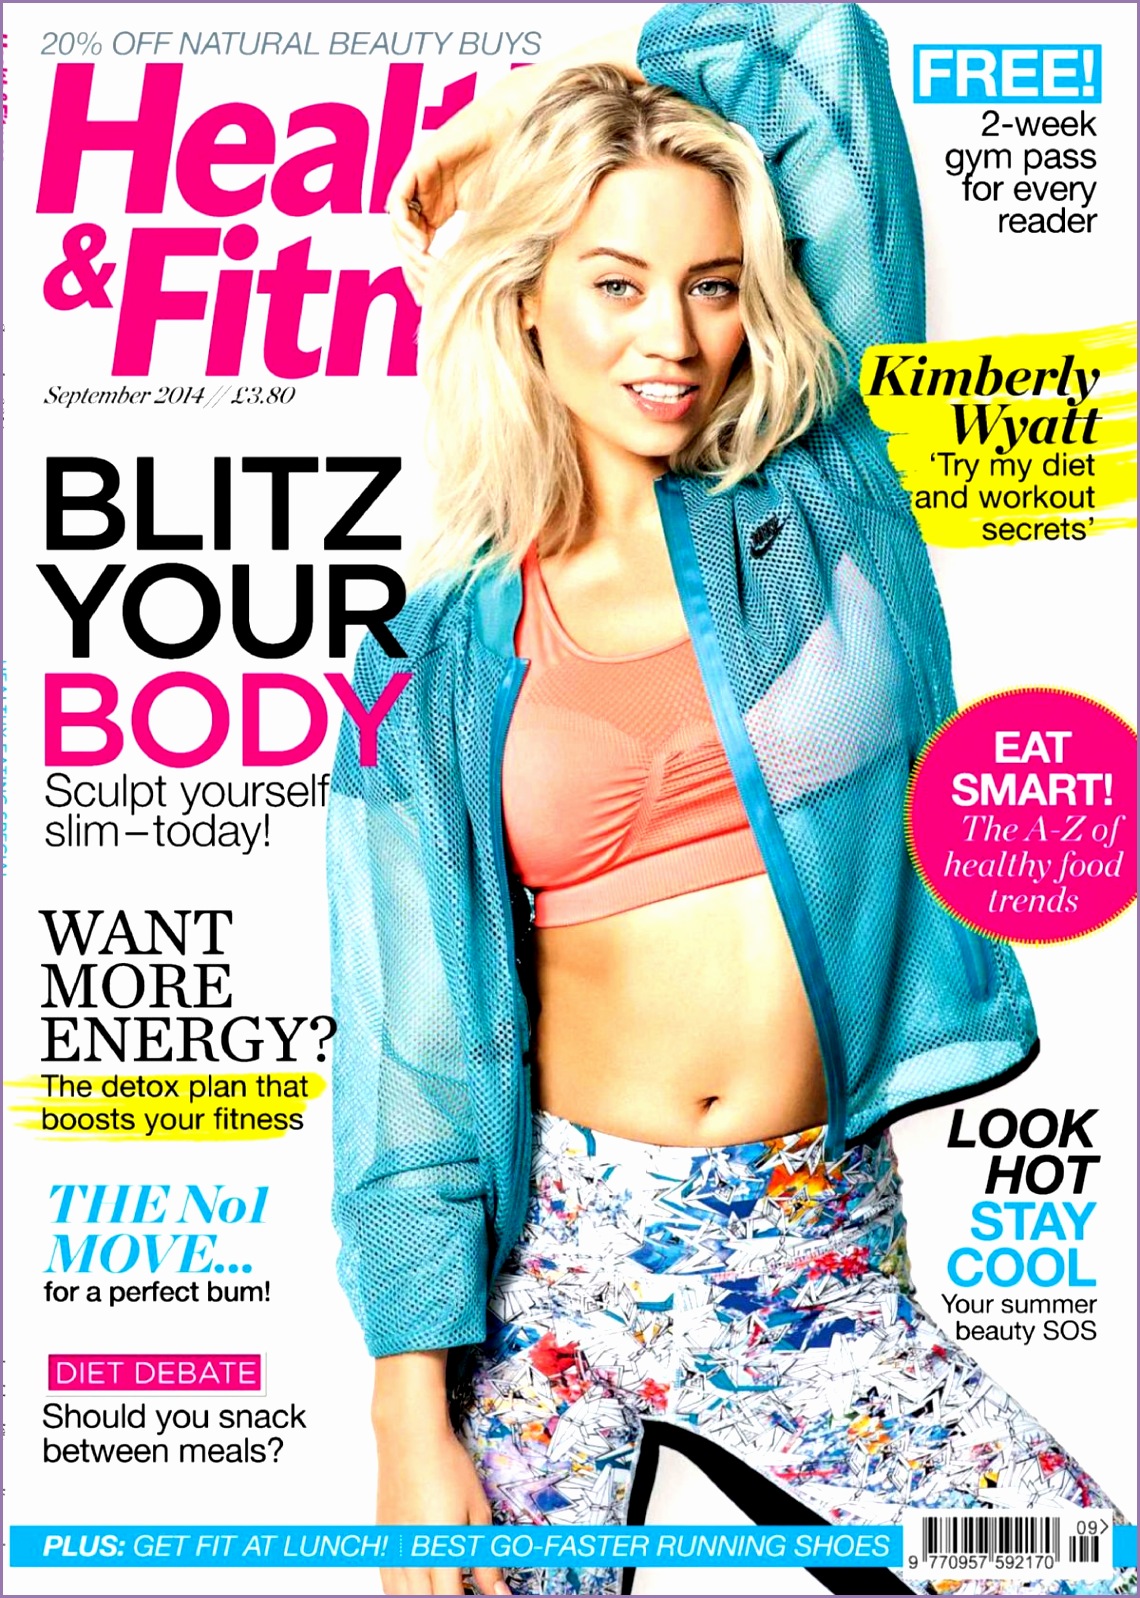 KIMBERLY WYATT in Health & Fitness Magazine September 2014 Issue